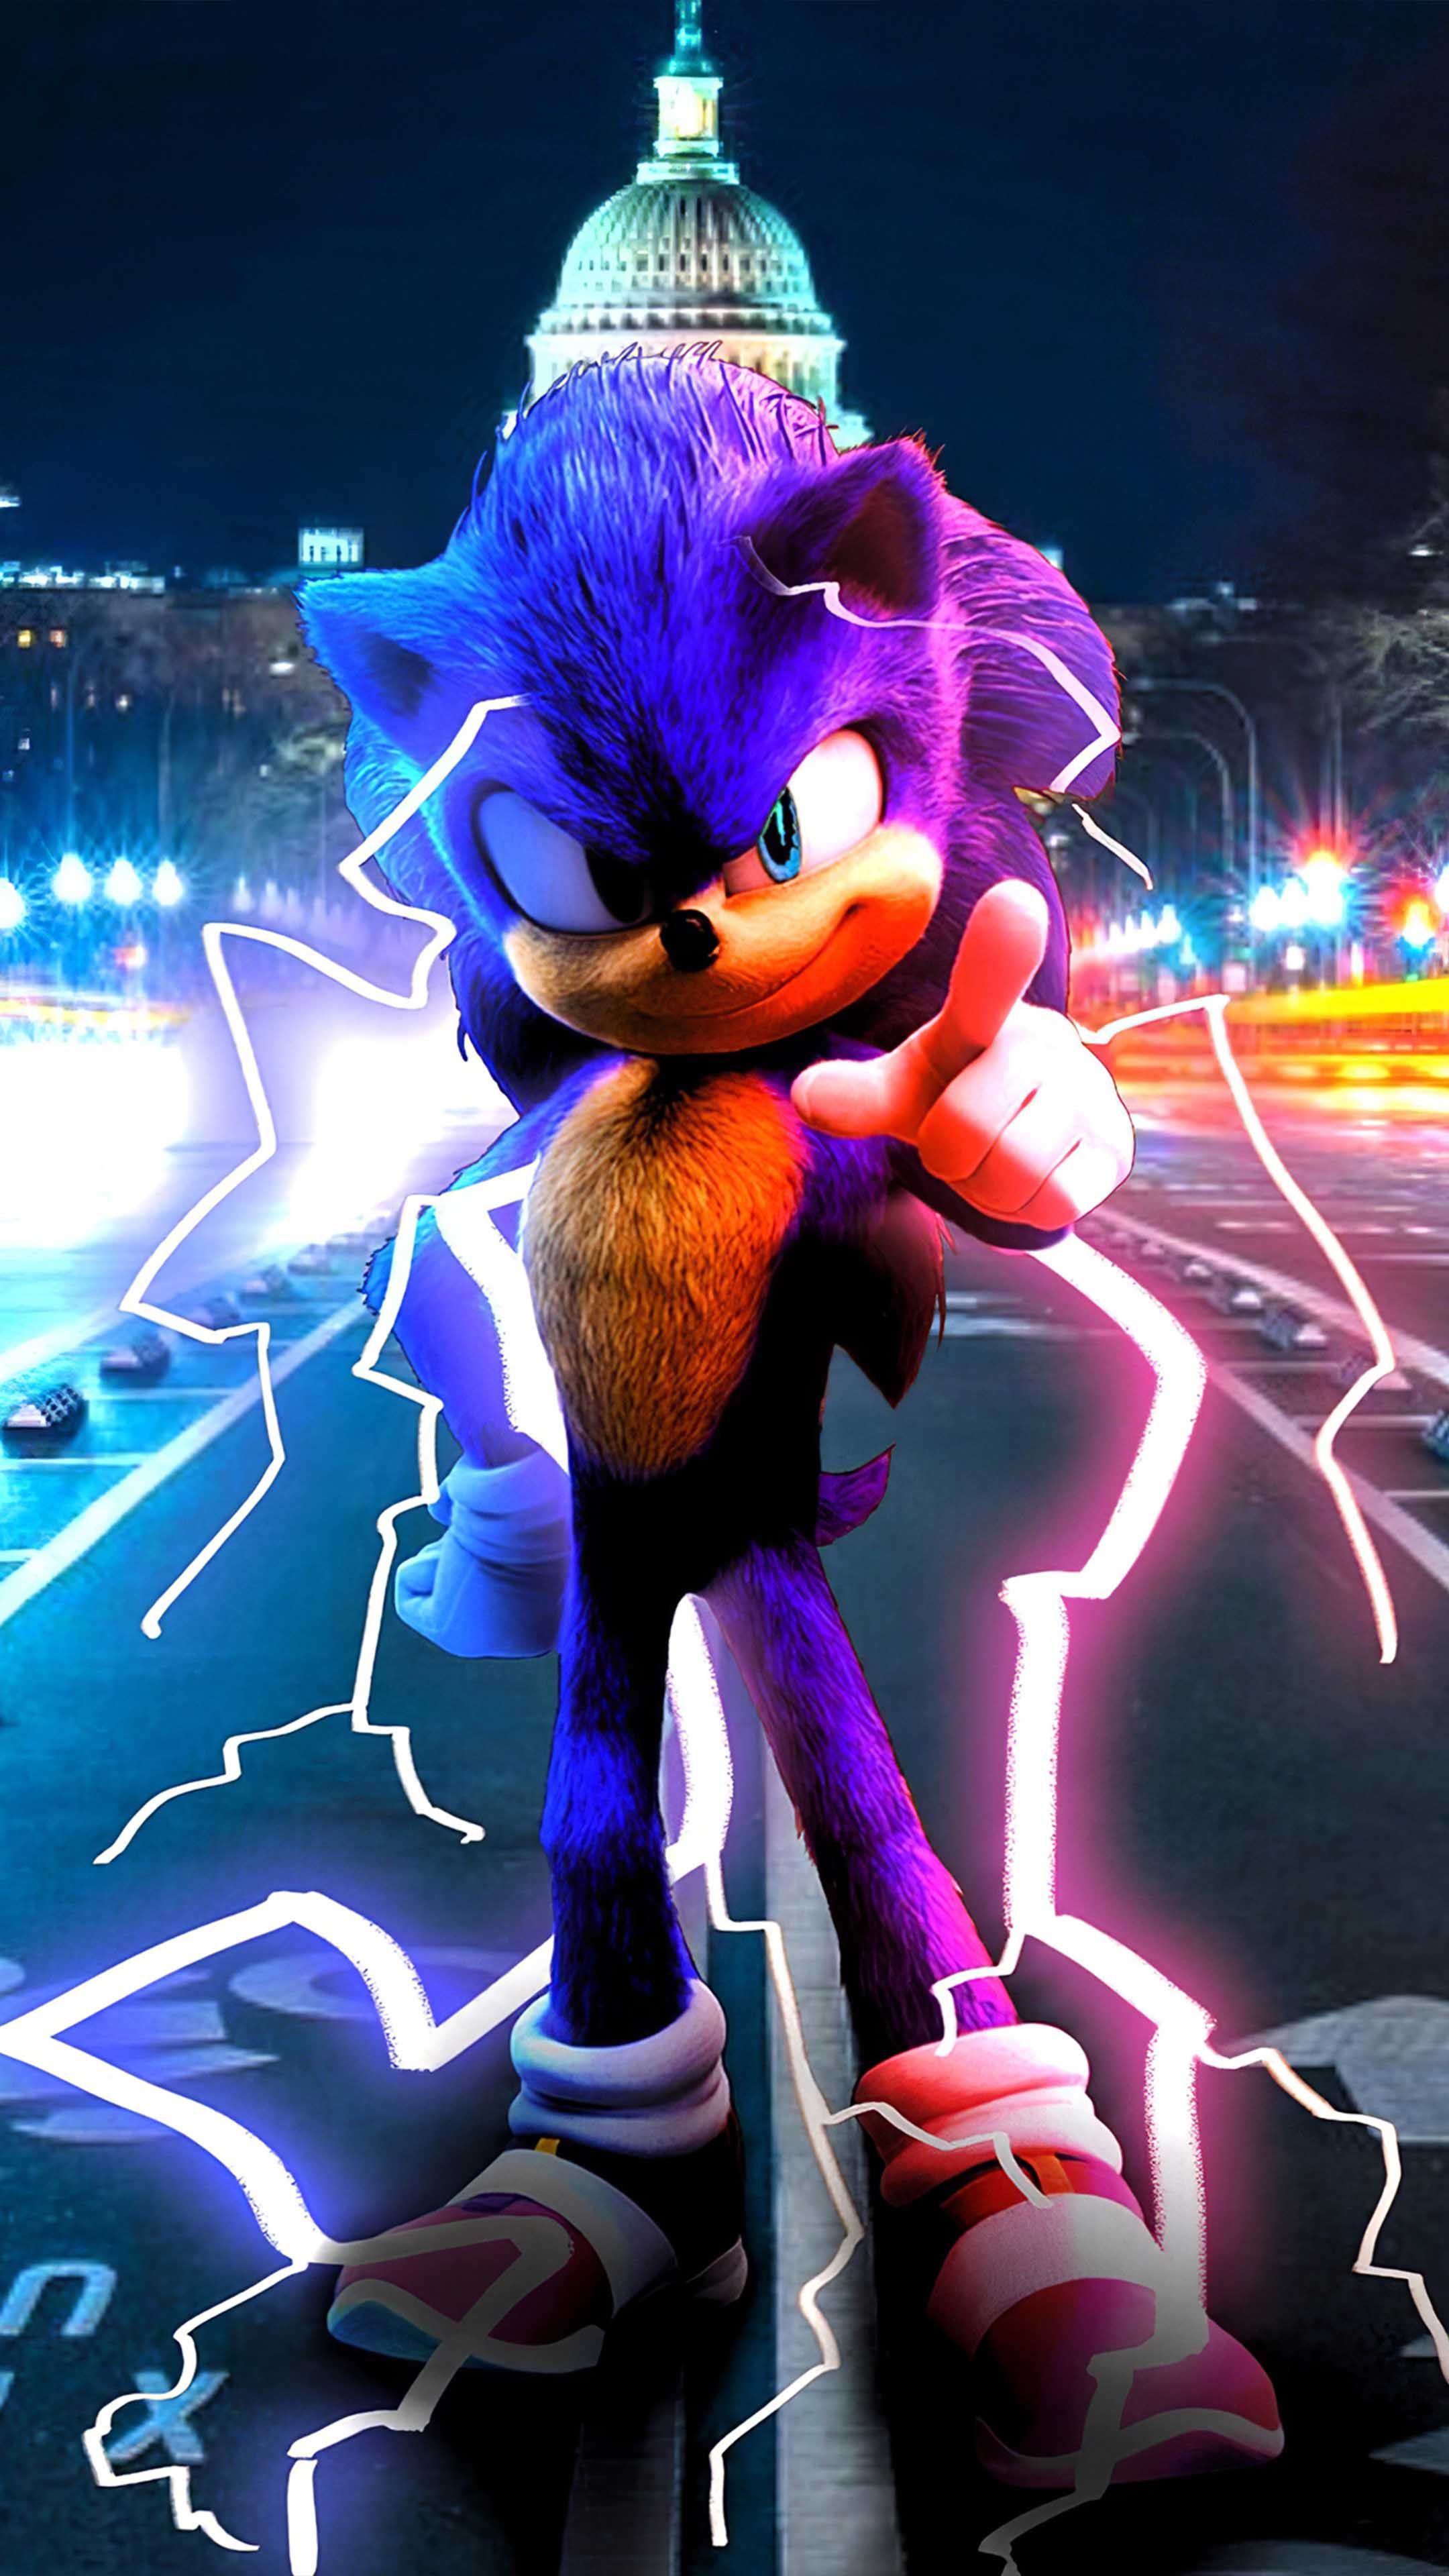 Sonic The Hedgehog Poster 2020 4K Ultra HD Mobile Wallpaper. Personajes animados de disney, Personajes de goku, Pelicula de sonic